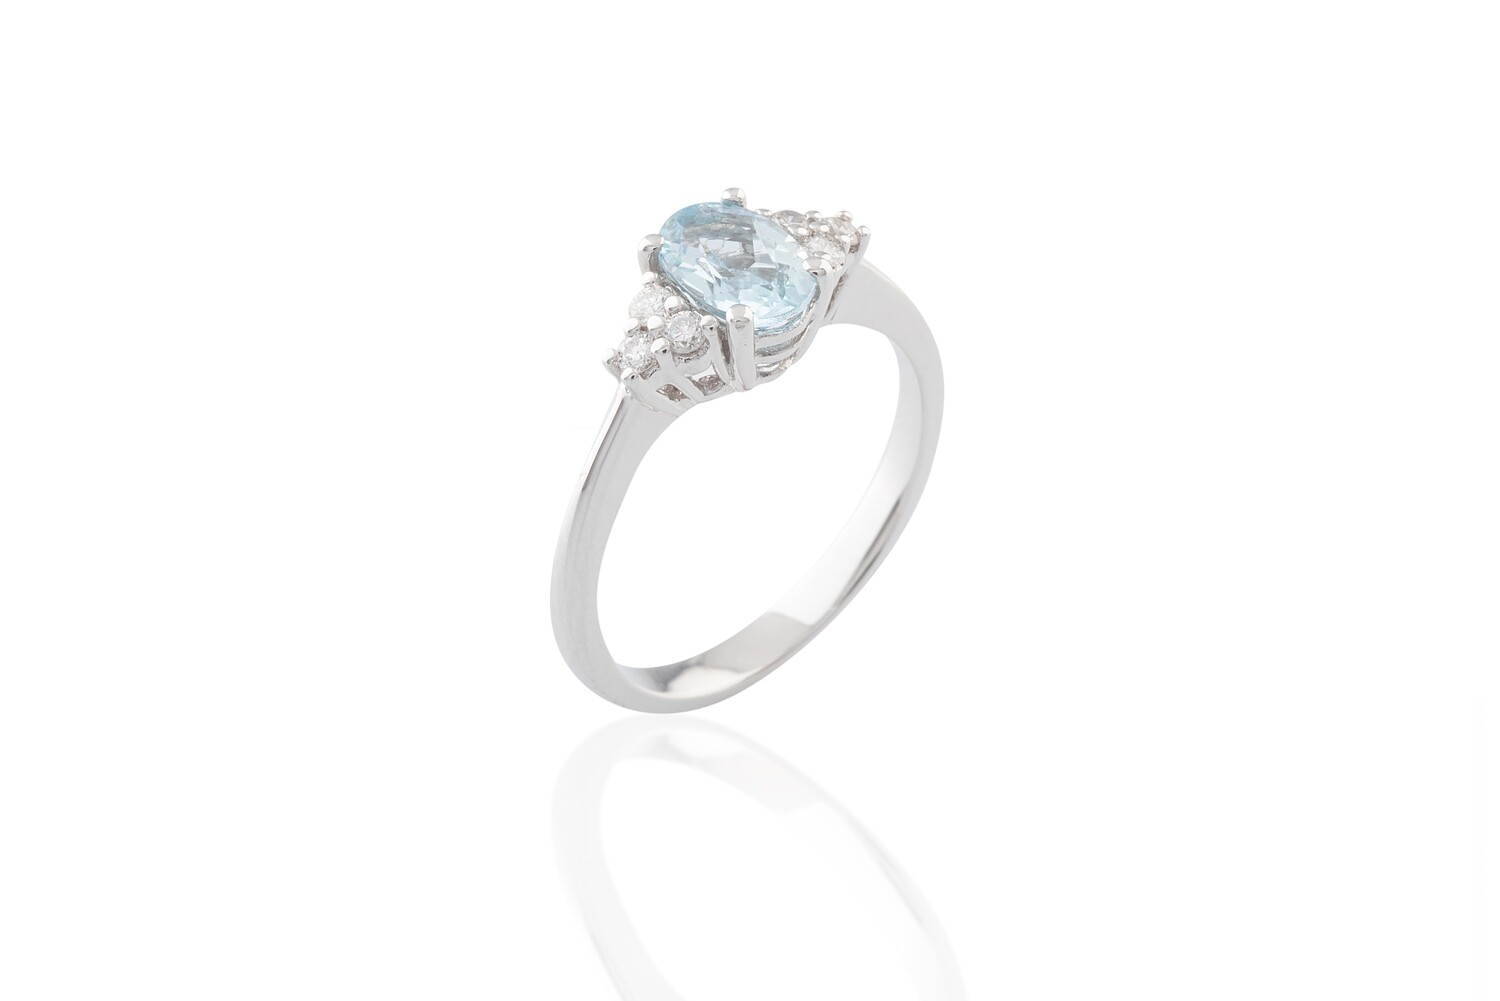 Aquamarine and Diamonds Ring